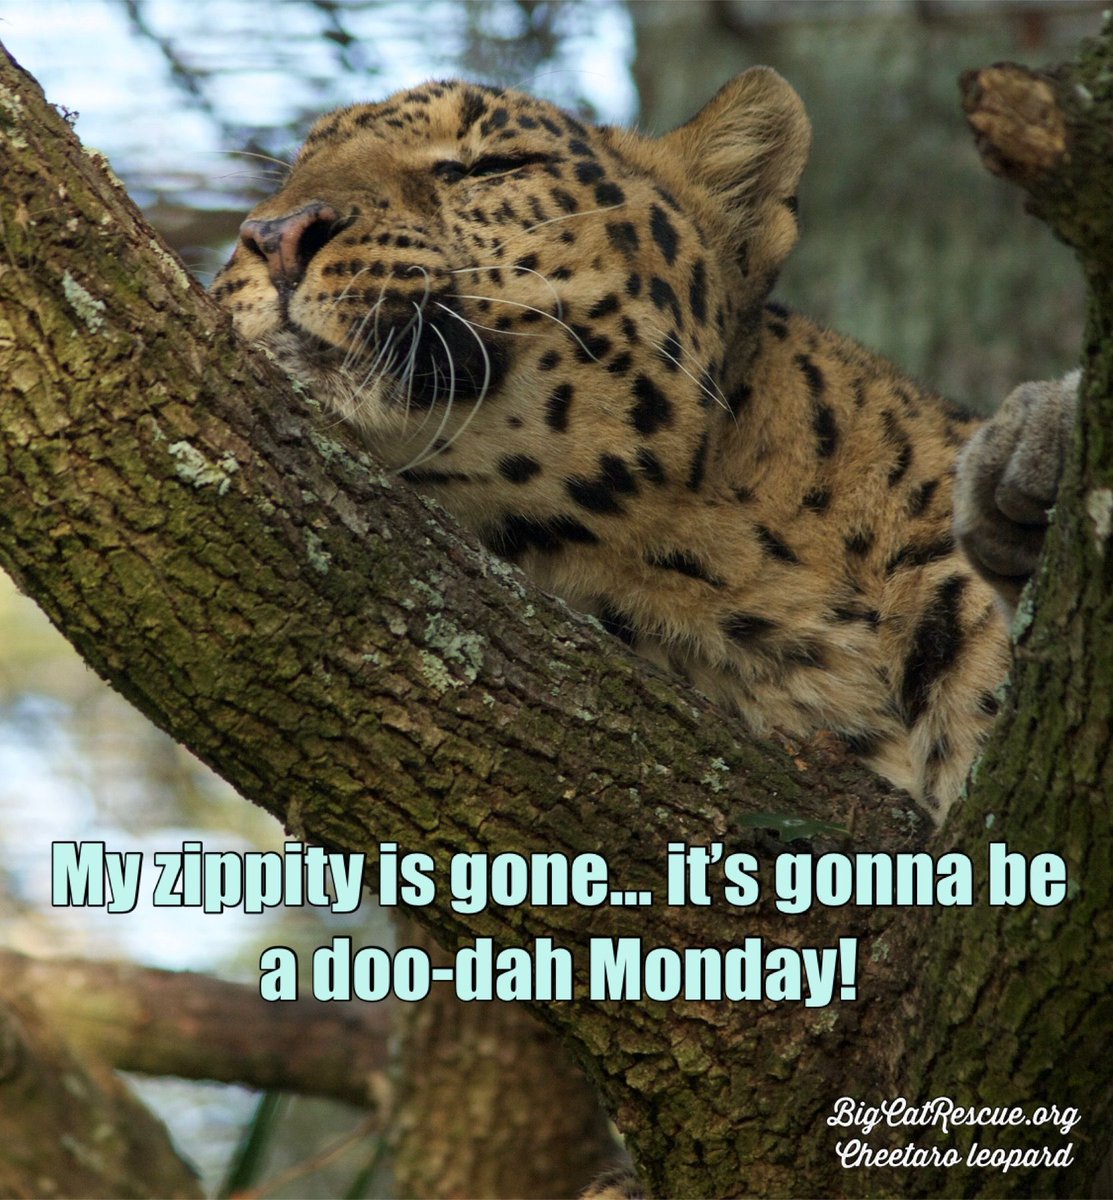 “My zippity is gone... it's gonna be a doo-dah Monday!” 

#CheetaroLeopard #BigCatRescue #BigCats #Leopard #Monday #Quote #Quotes #Memes #Sleep #CaroleBaskin